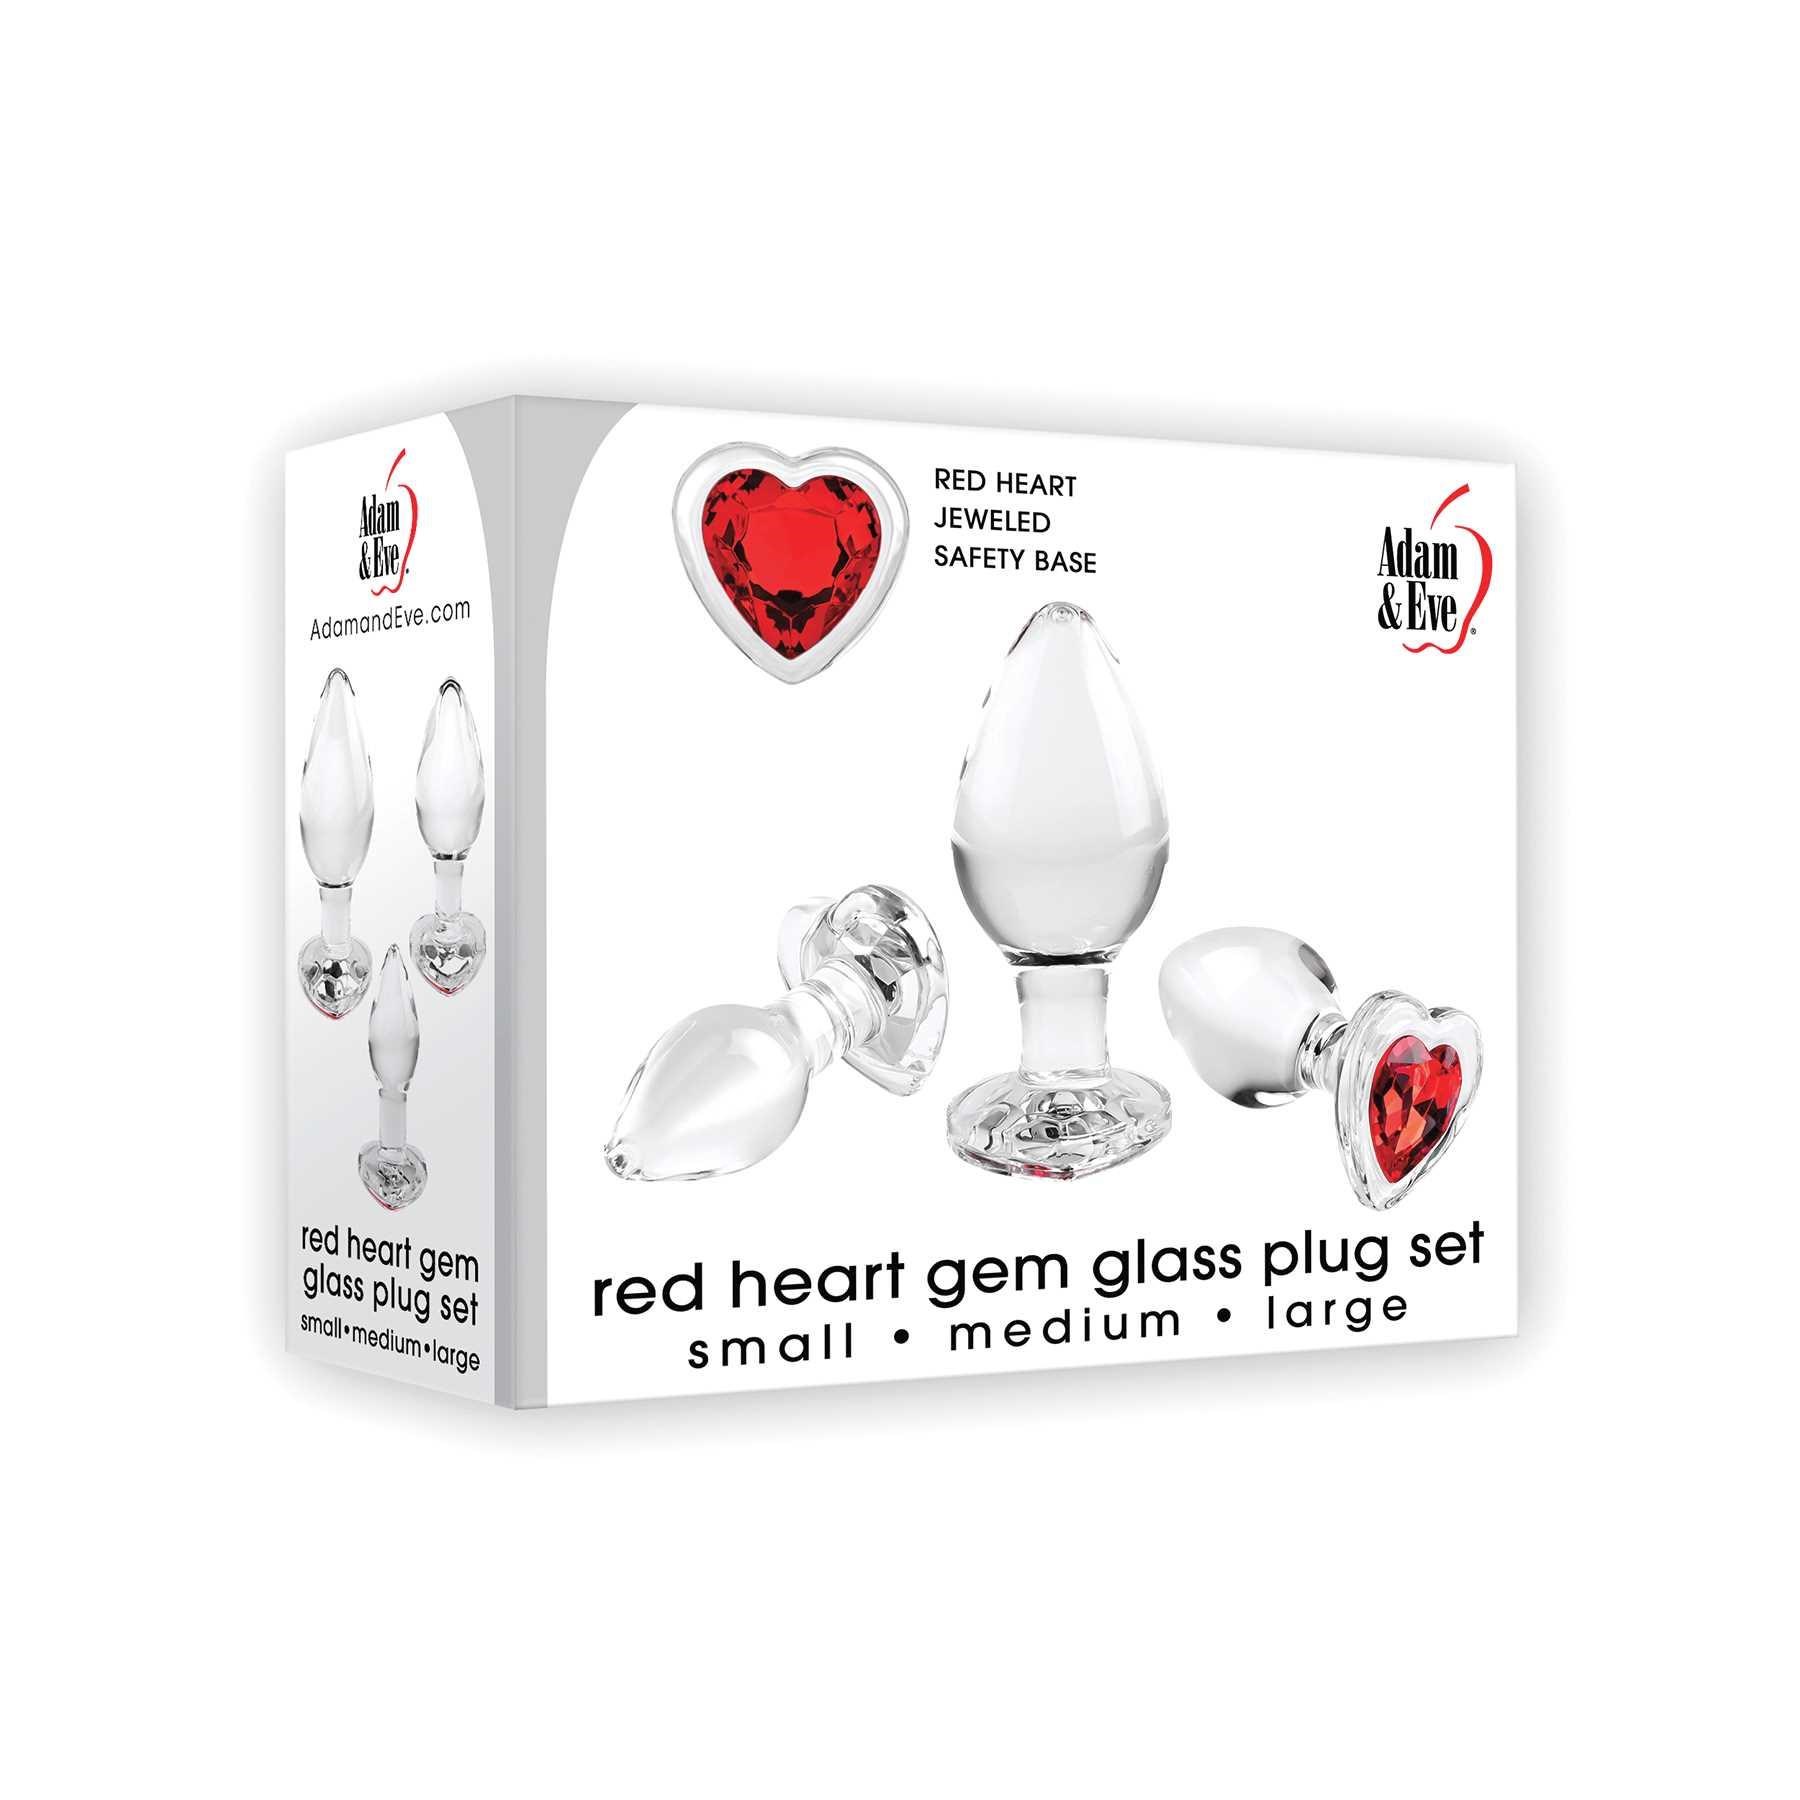 Red Heart Gem Glass Plug Set box packaging